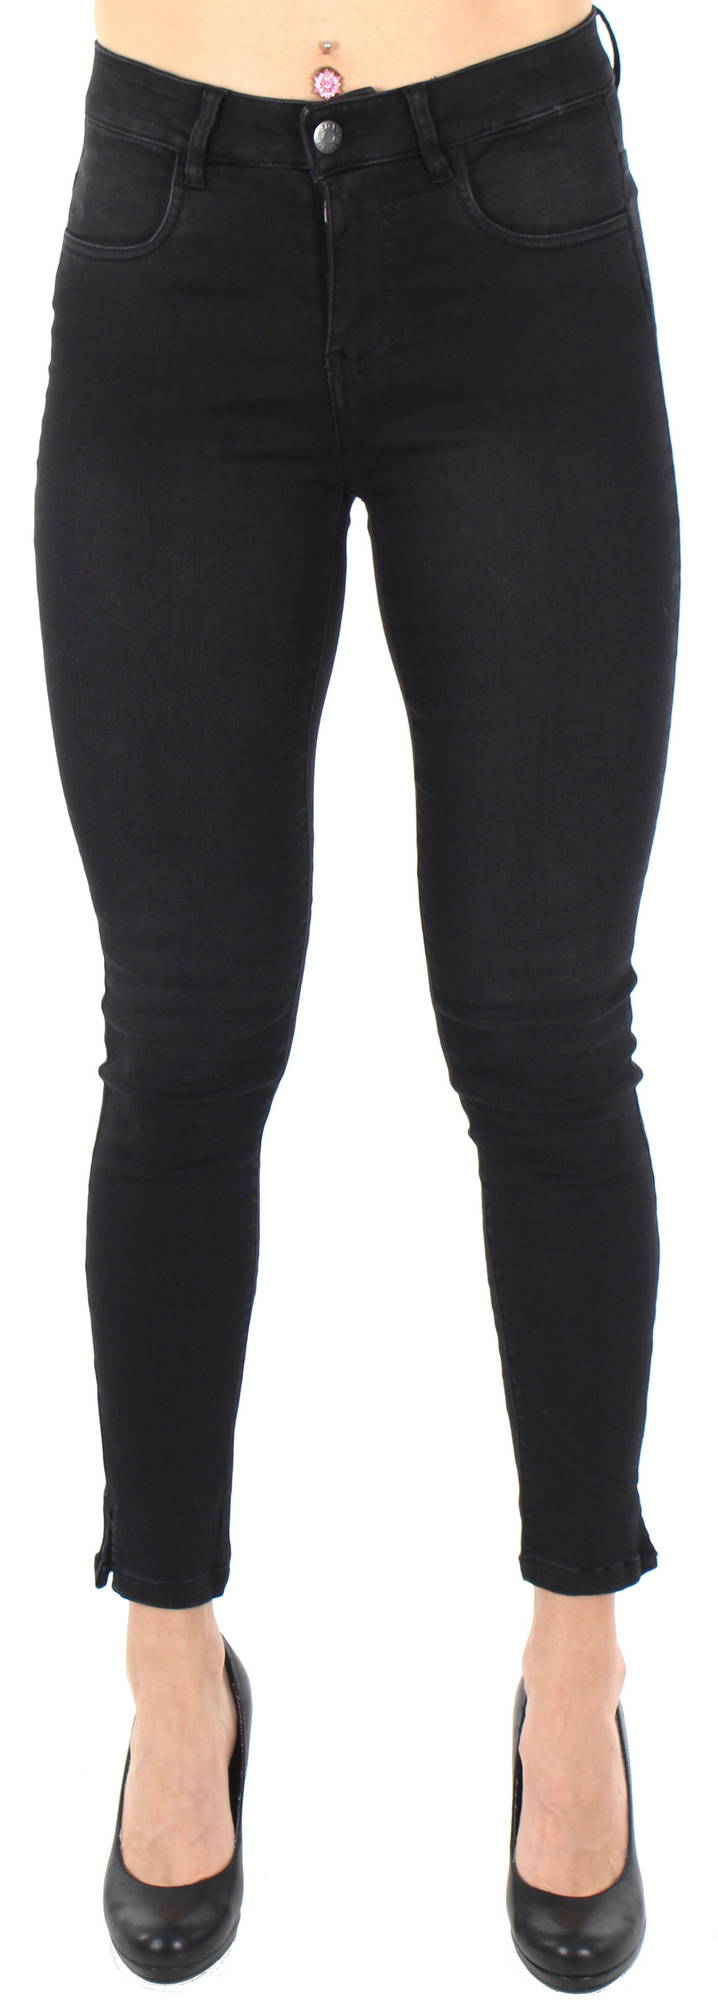 JDY Jeans Debina skinny reg, Dark Gray - Stilettoshop.eu webstore